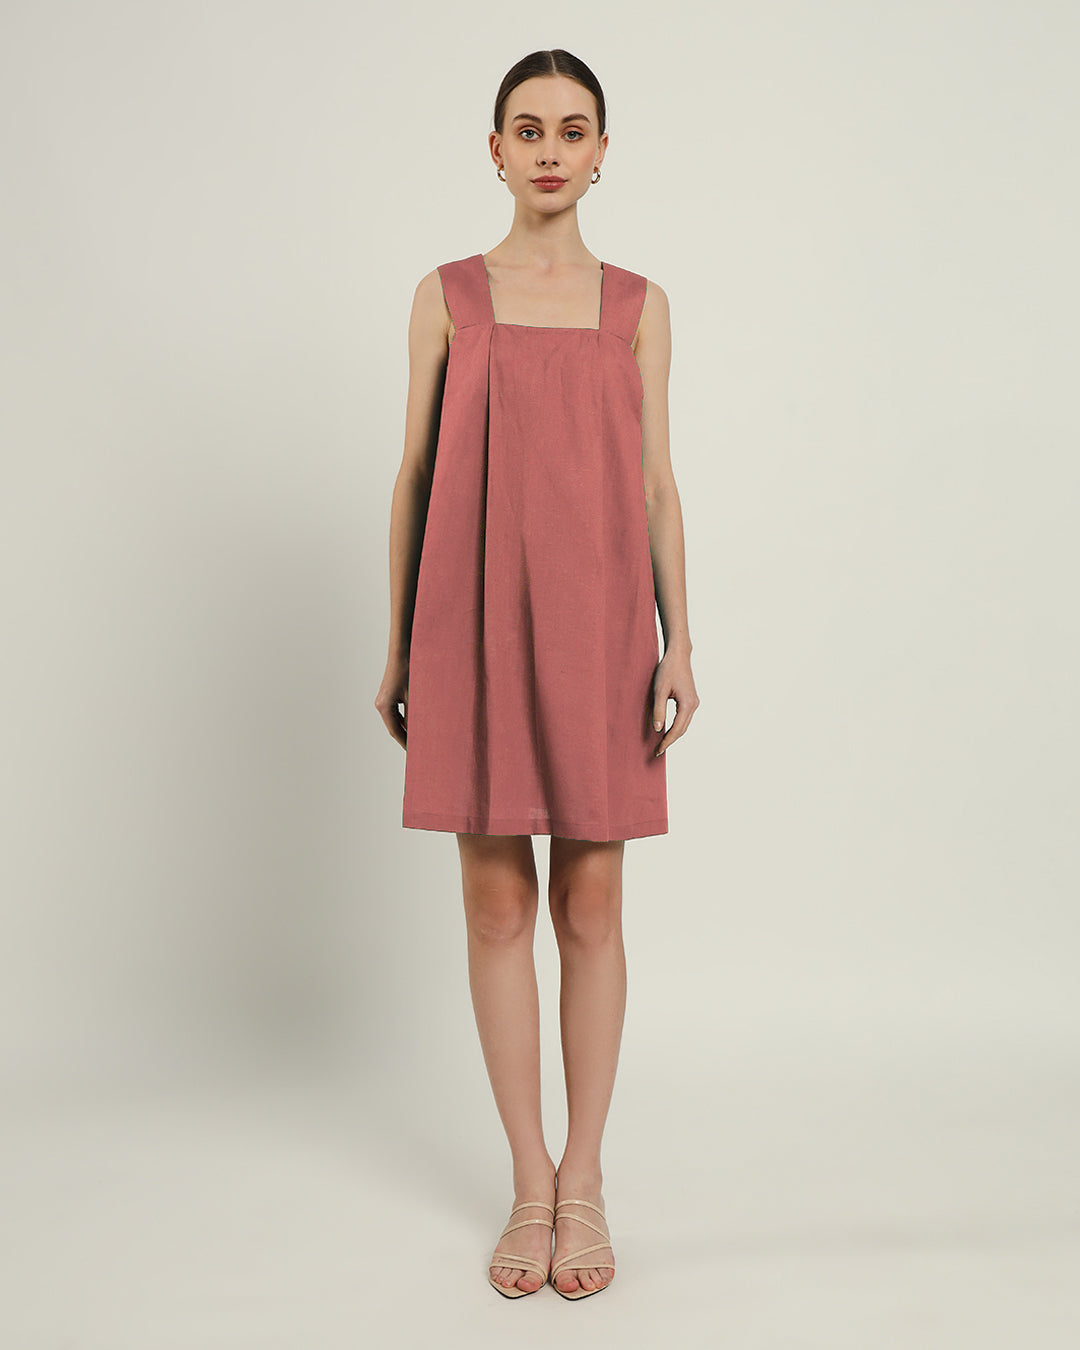 The Larissa Ivory Pink Dress